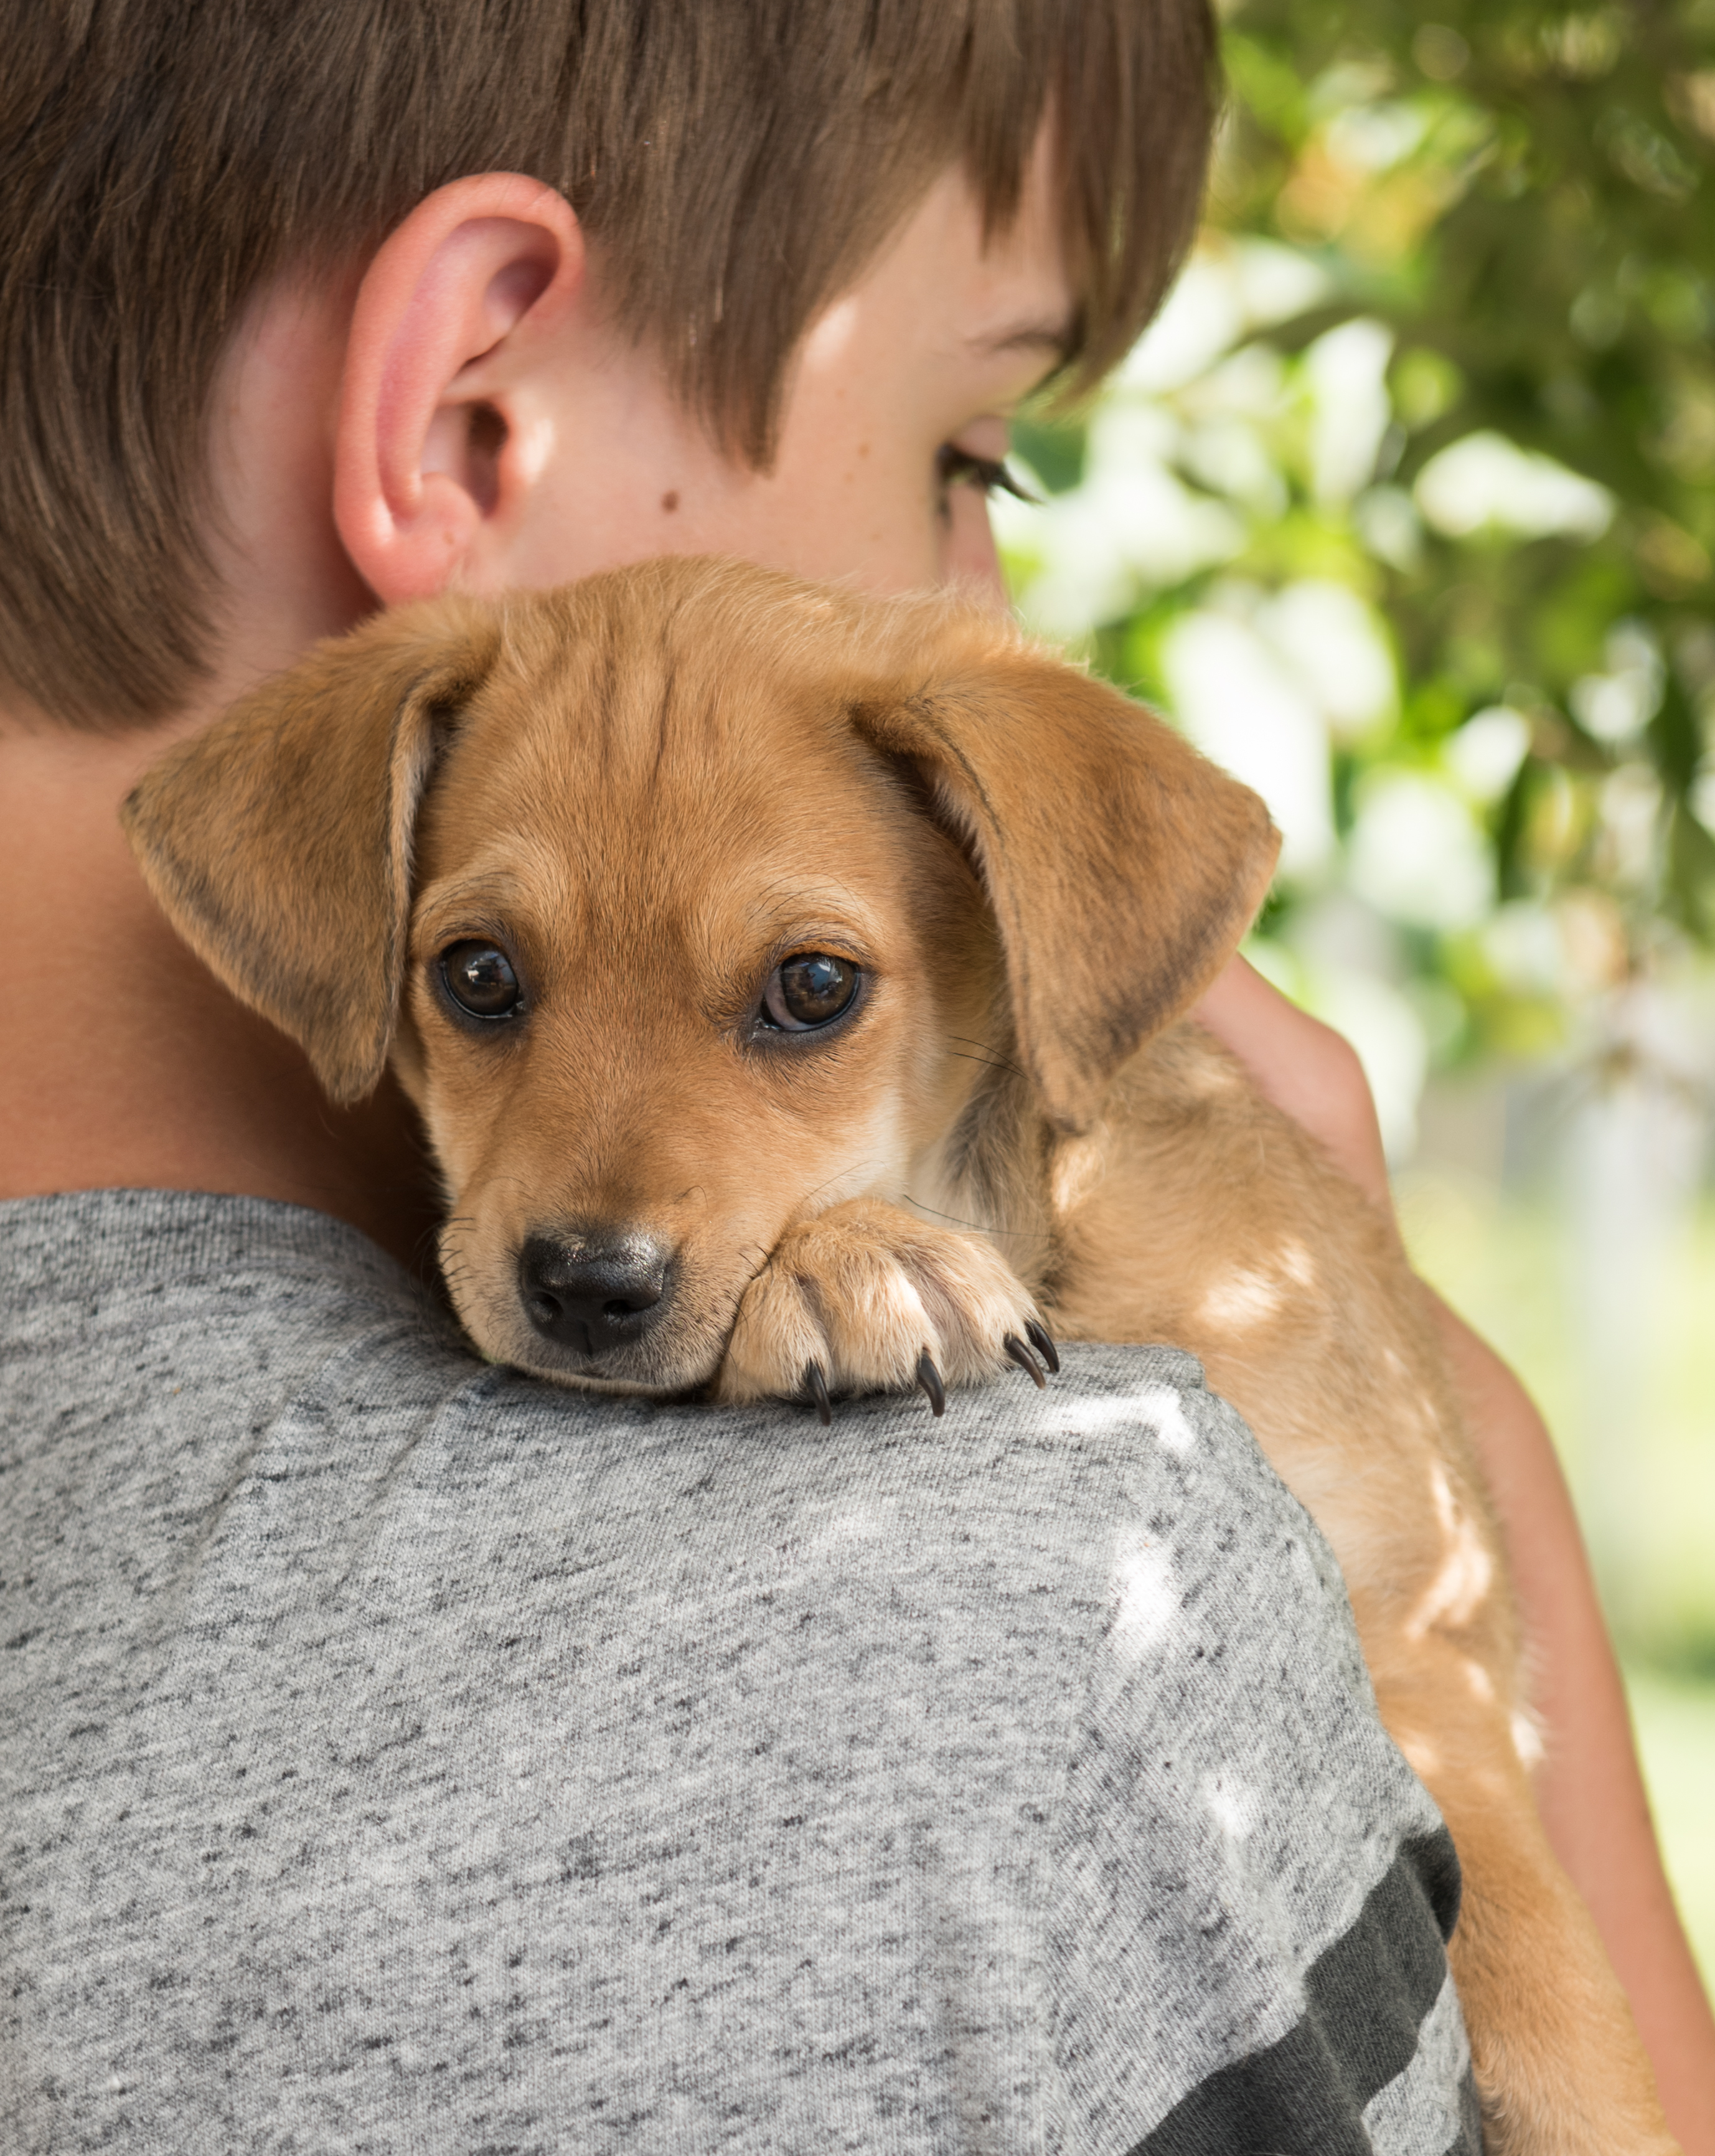 Boy with little puppy | Source: Shutterstock.com